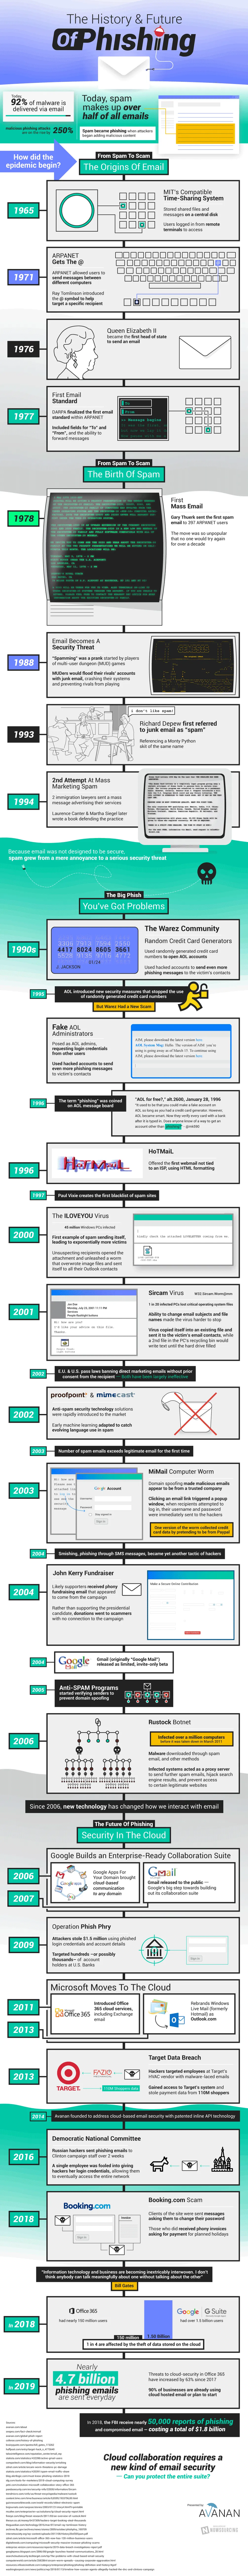 The History & Future of Phishing